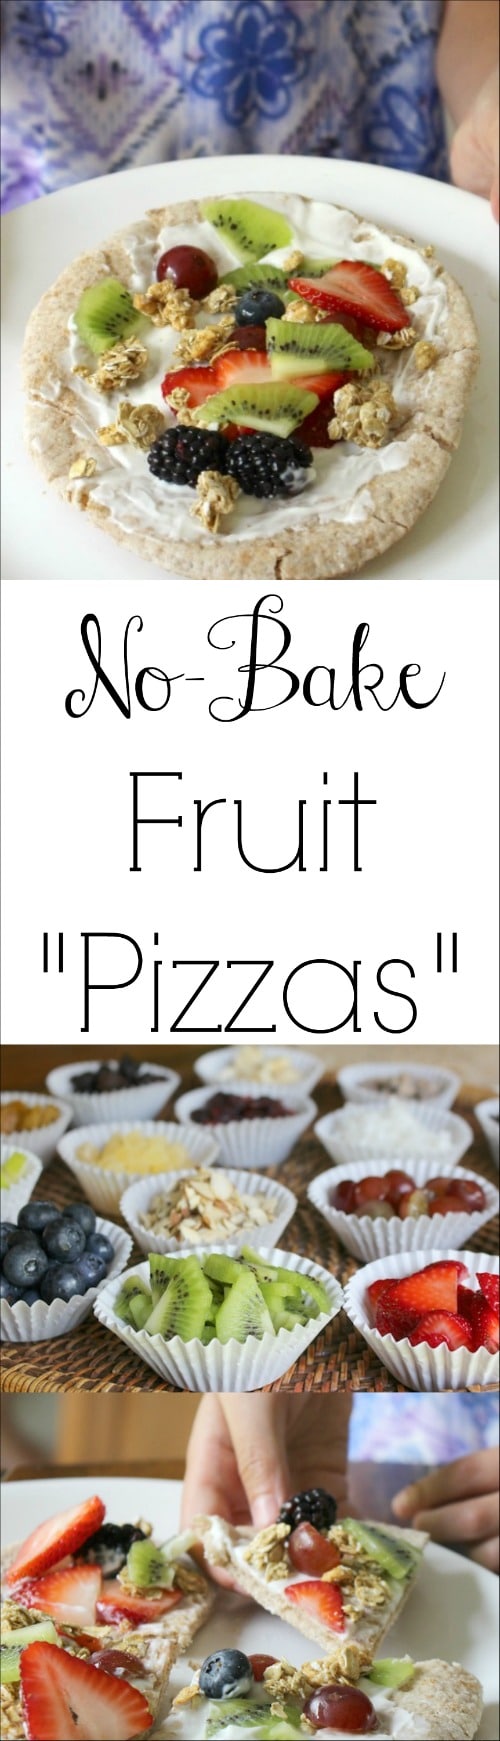 No-Bake Fruit "Pizzas" Recipe {www.TwoHealthyKitchens.com}